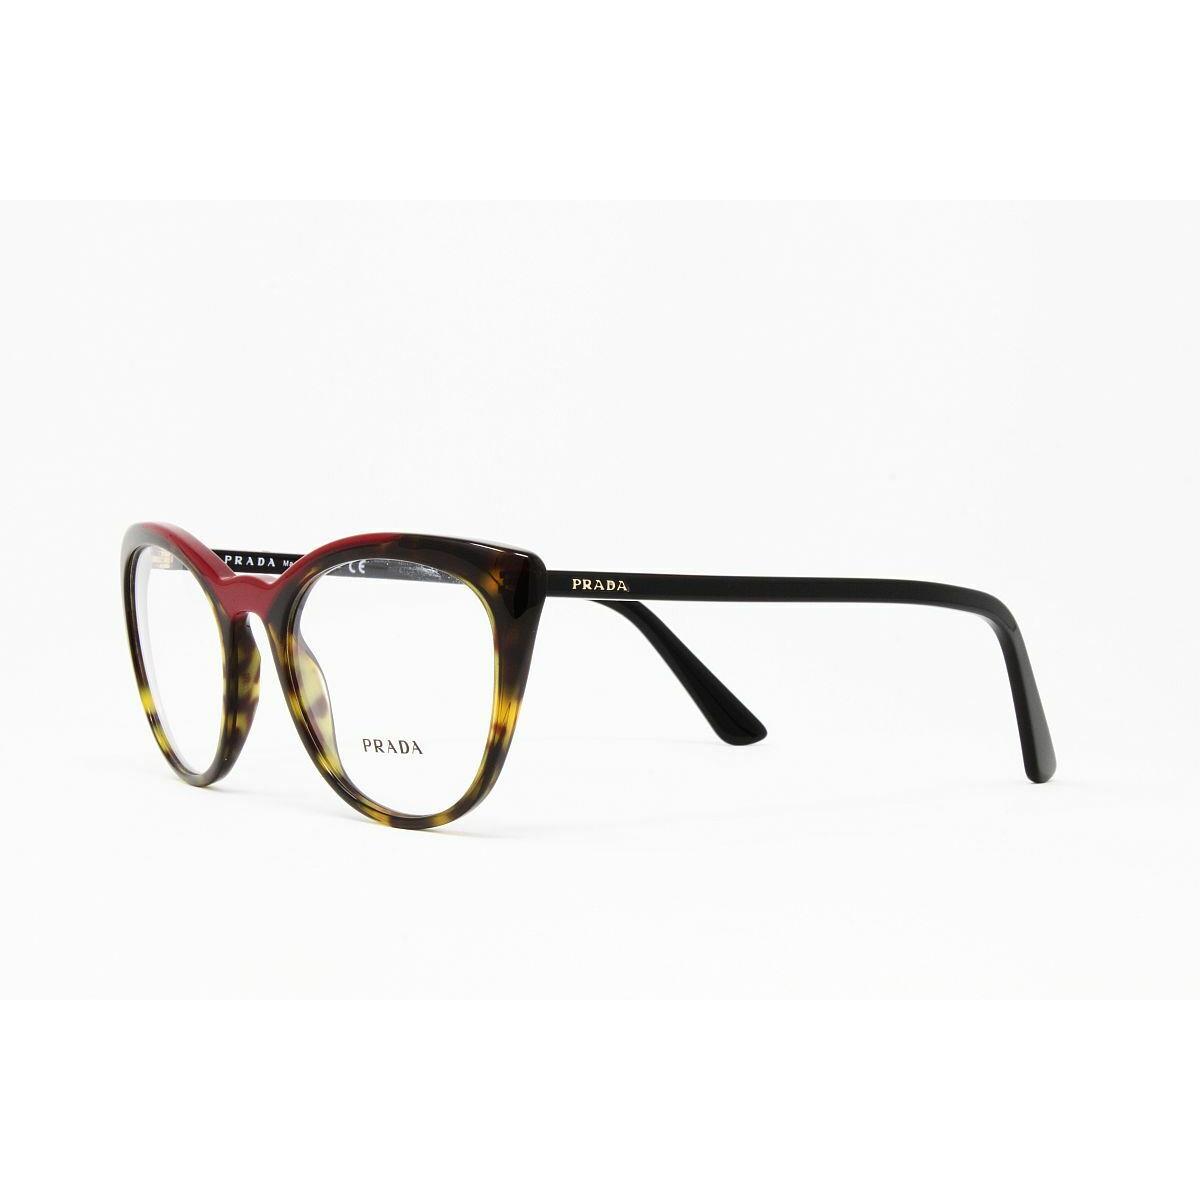 Prada eyeglasses  - Red Havana Frame 1